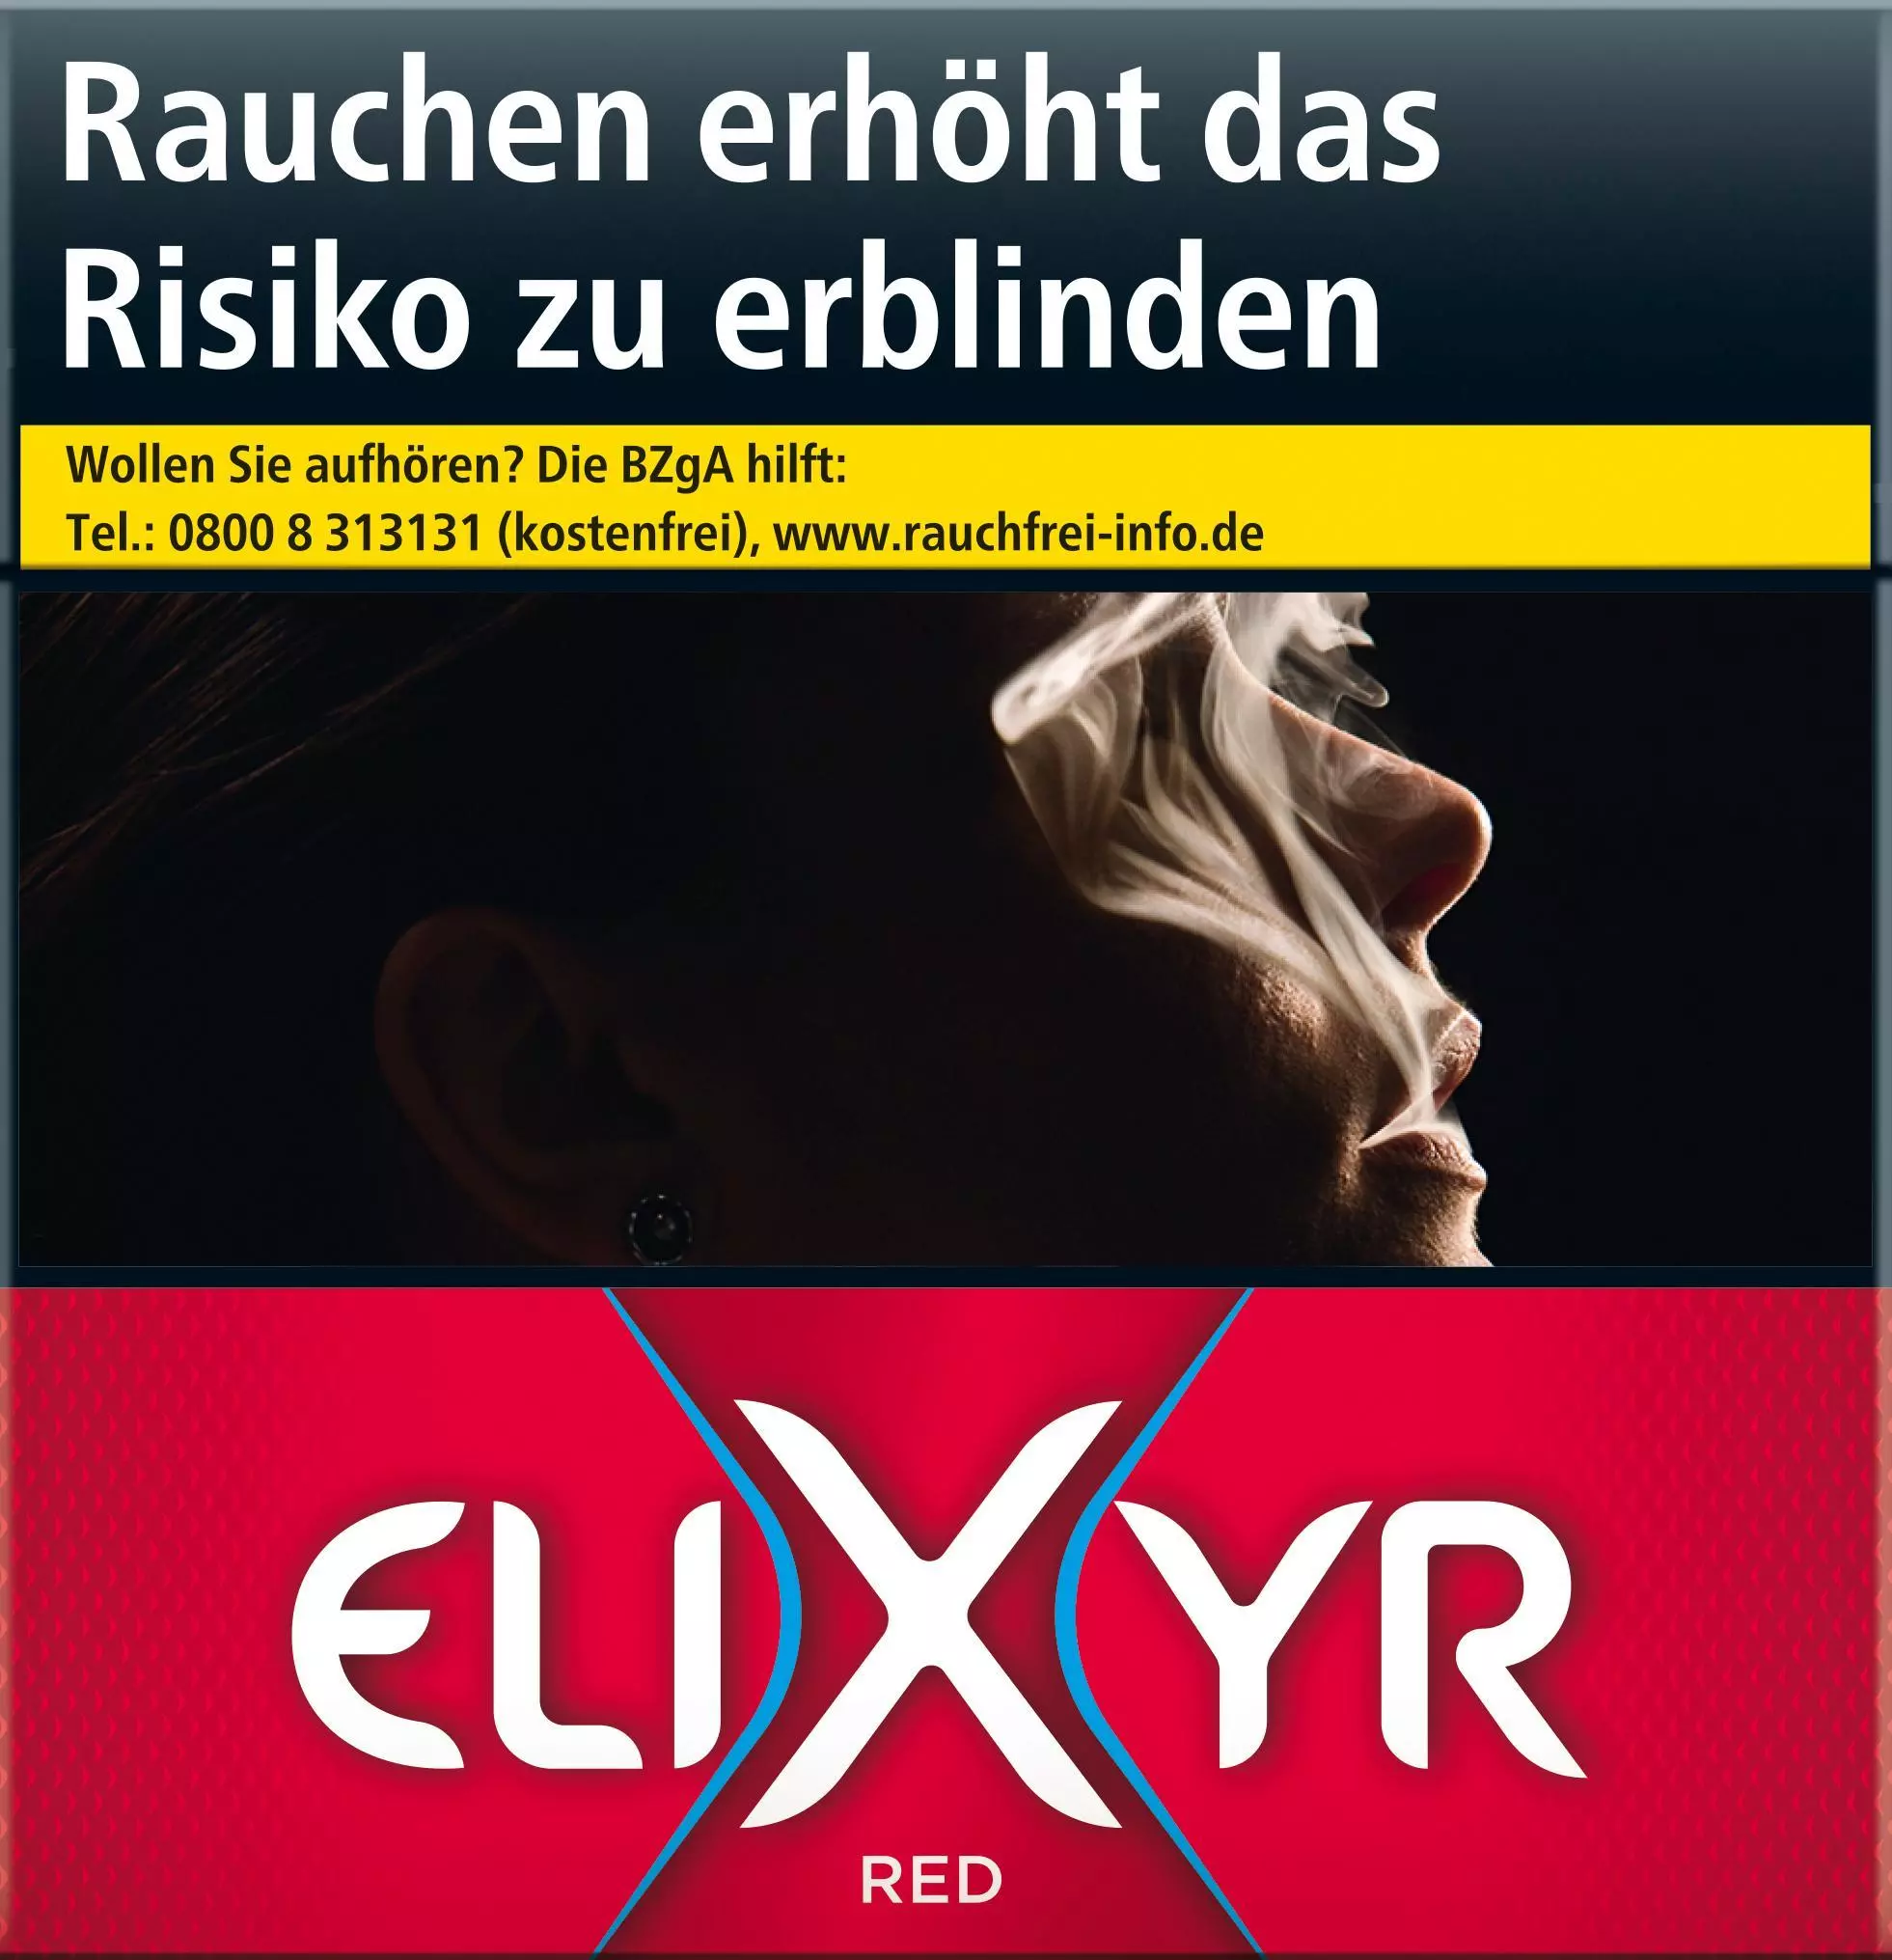 Elixyr Red 5XL 4 x 49 Zigaretten